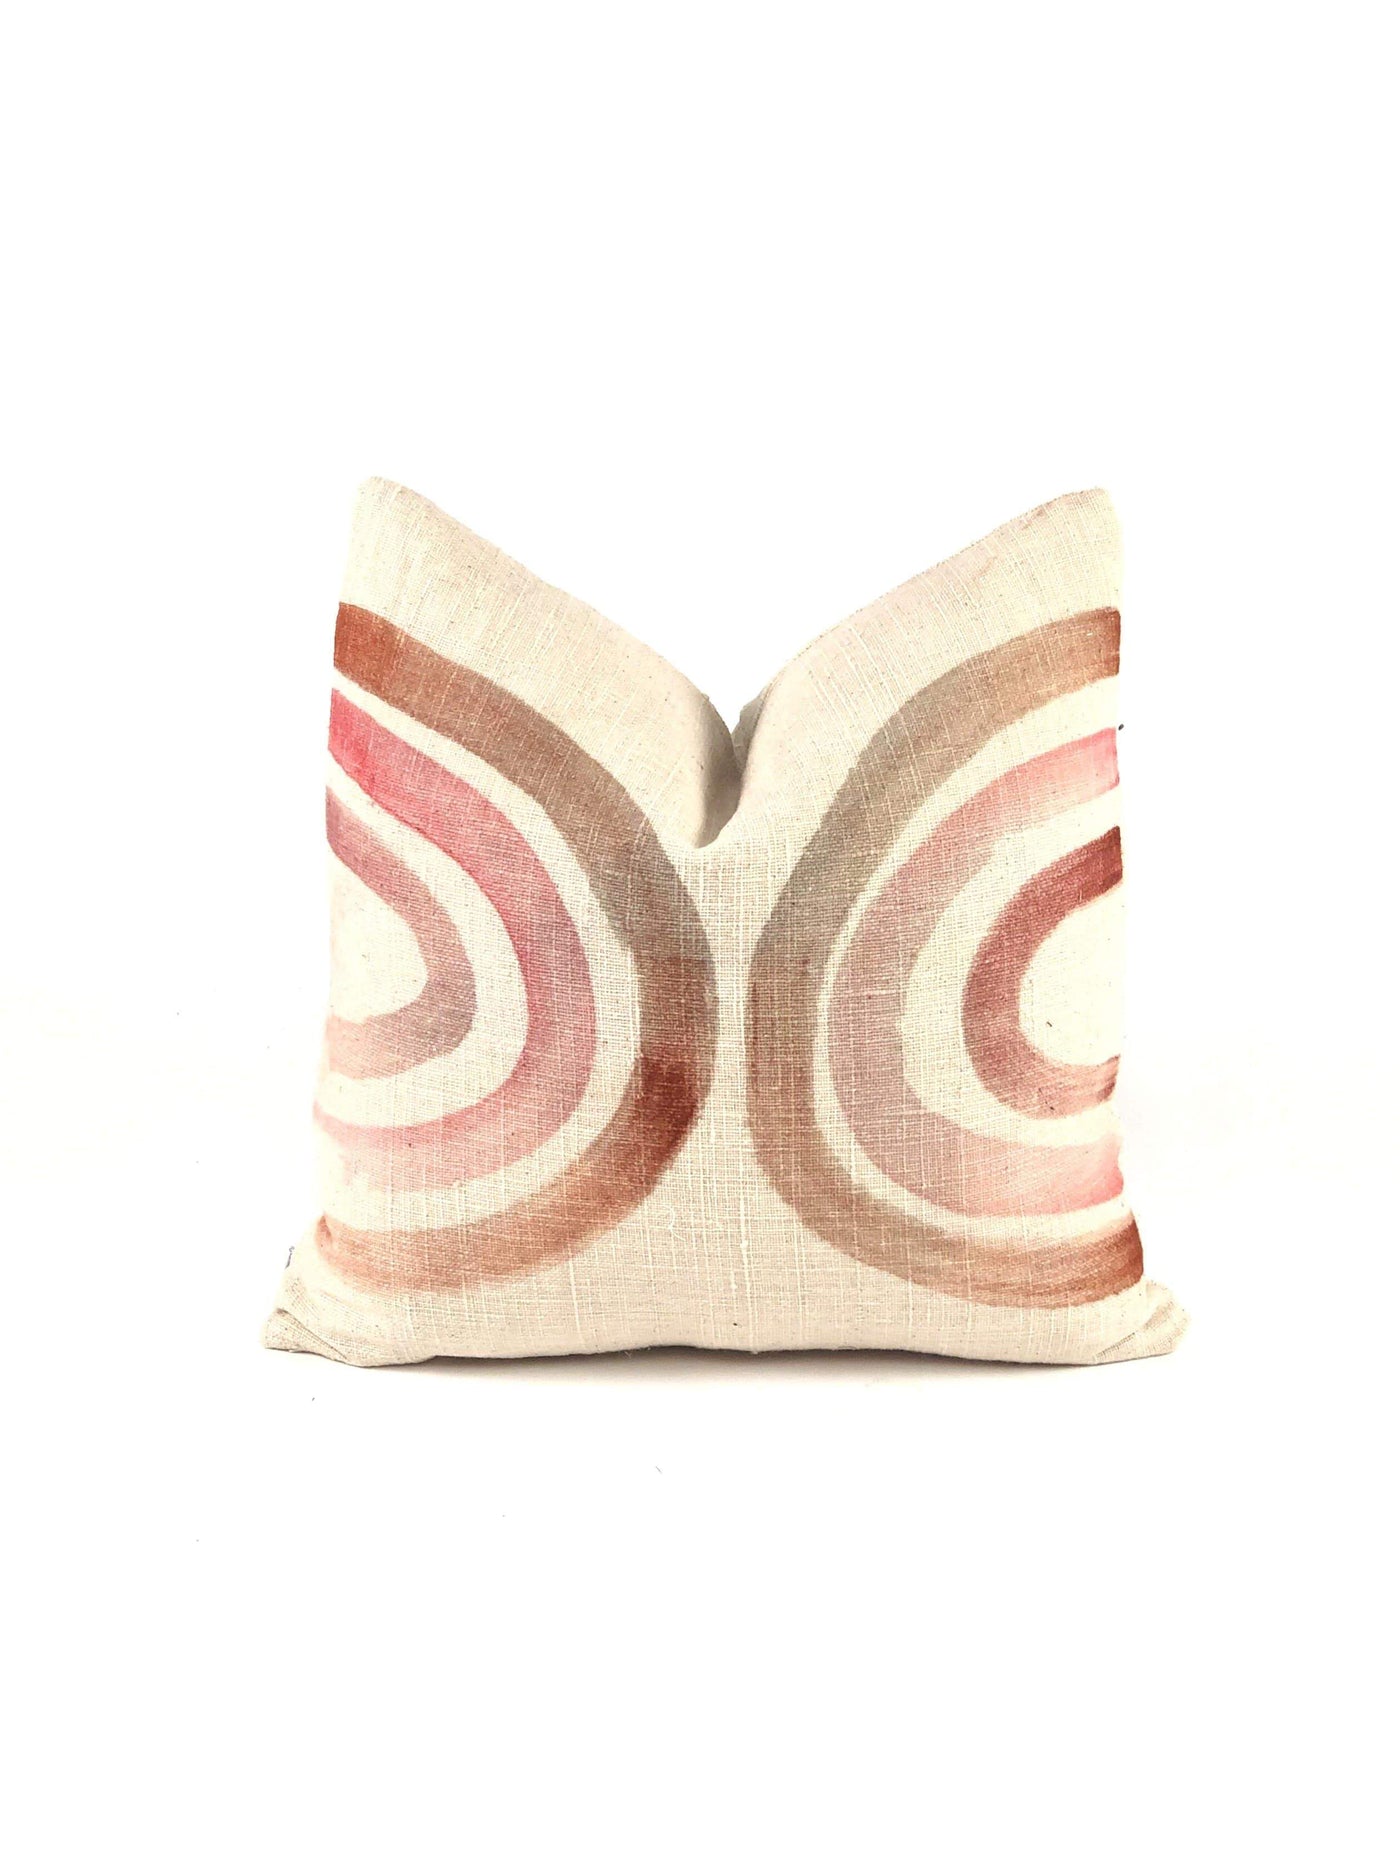 Bryar Wolf Handmade Decorative Throw Pillows With Insert / 20" x 20" LYN